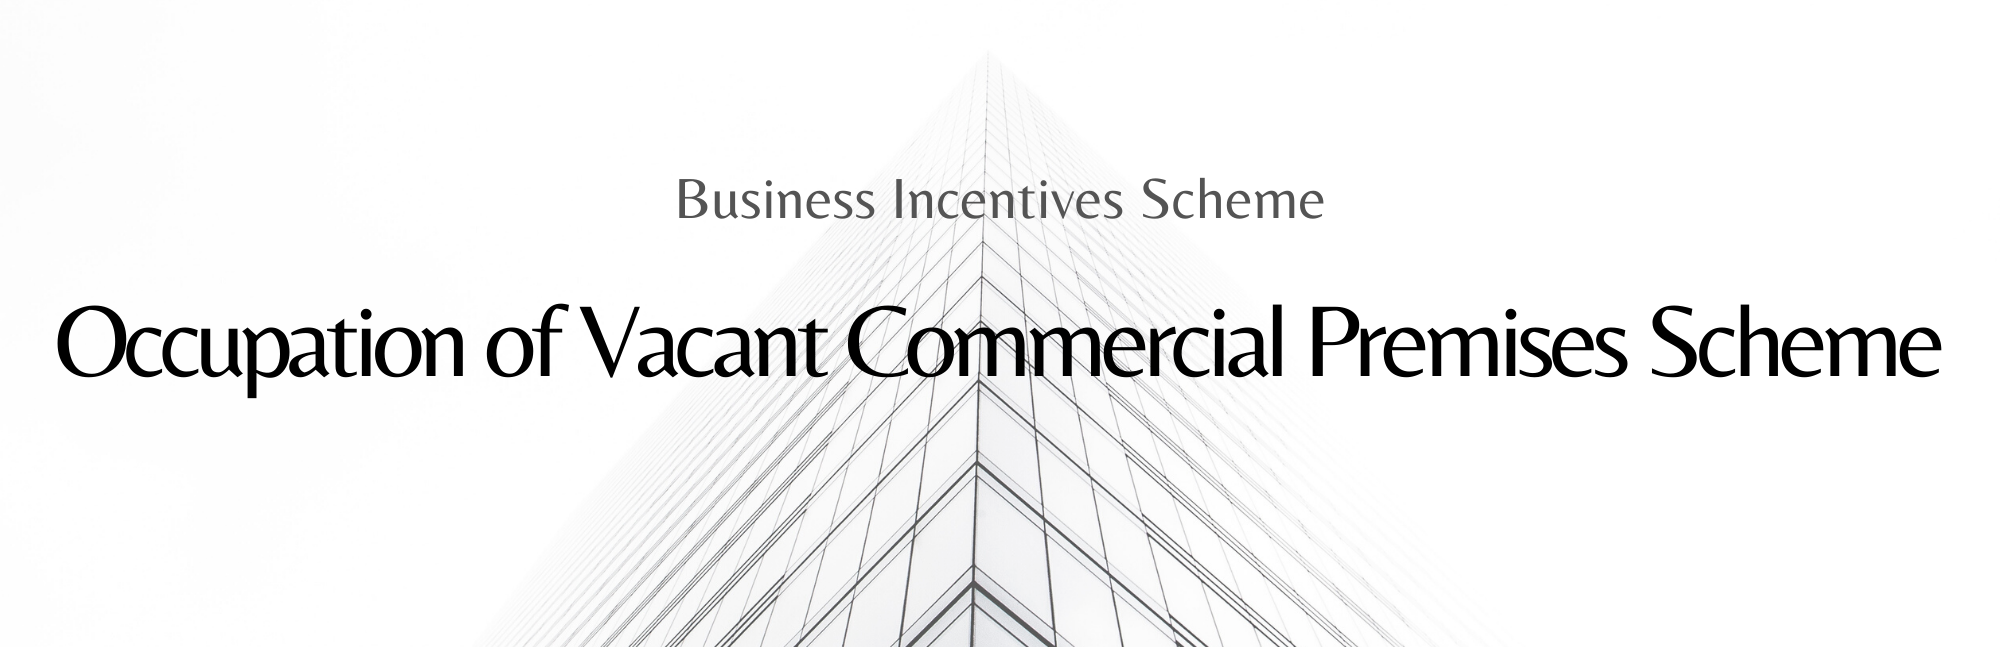 Occupation of Vacant Commercial Premises Scheme Header Image